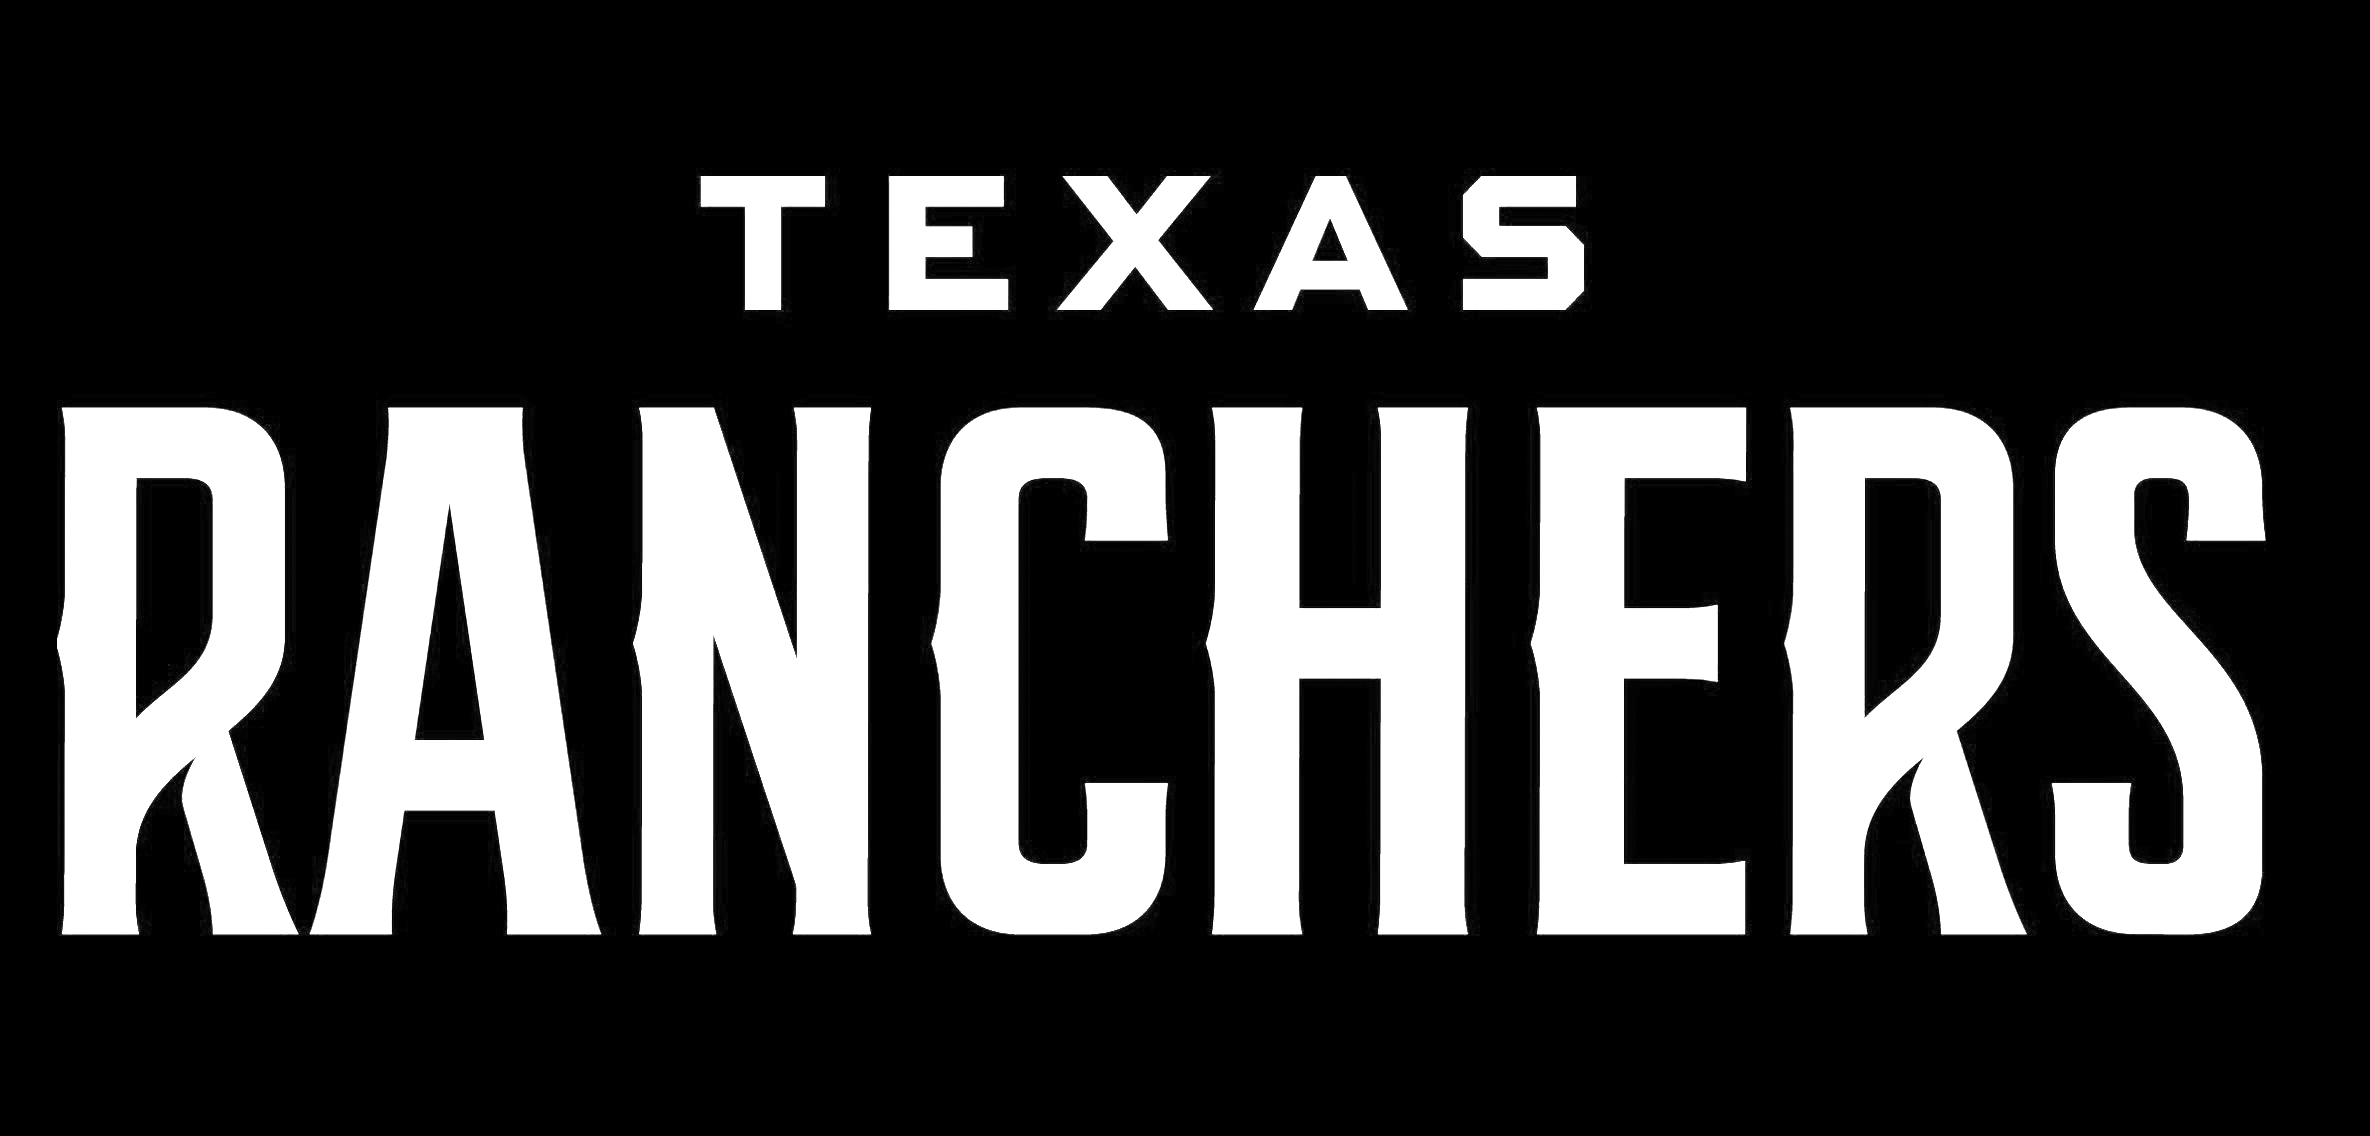 Texas Ranchers